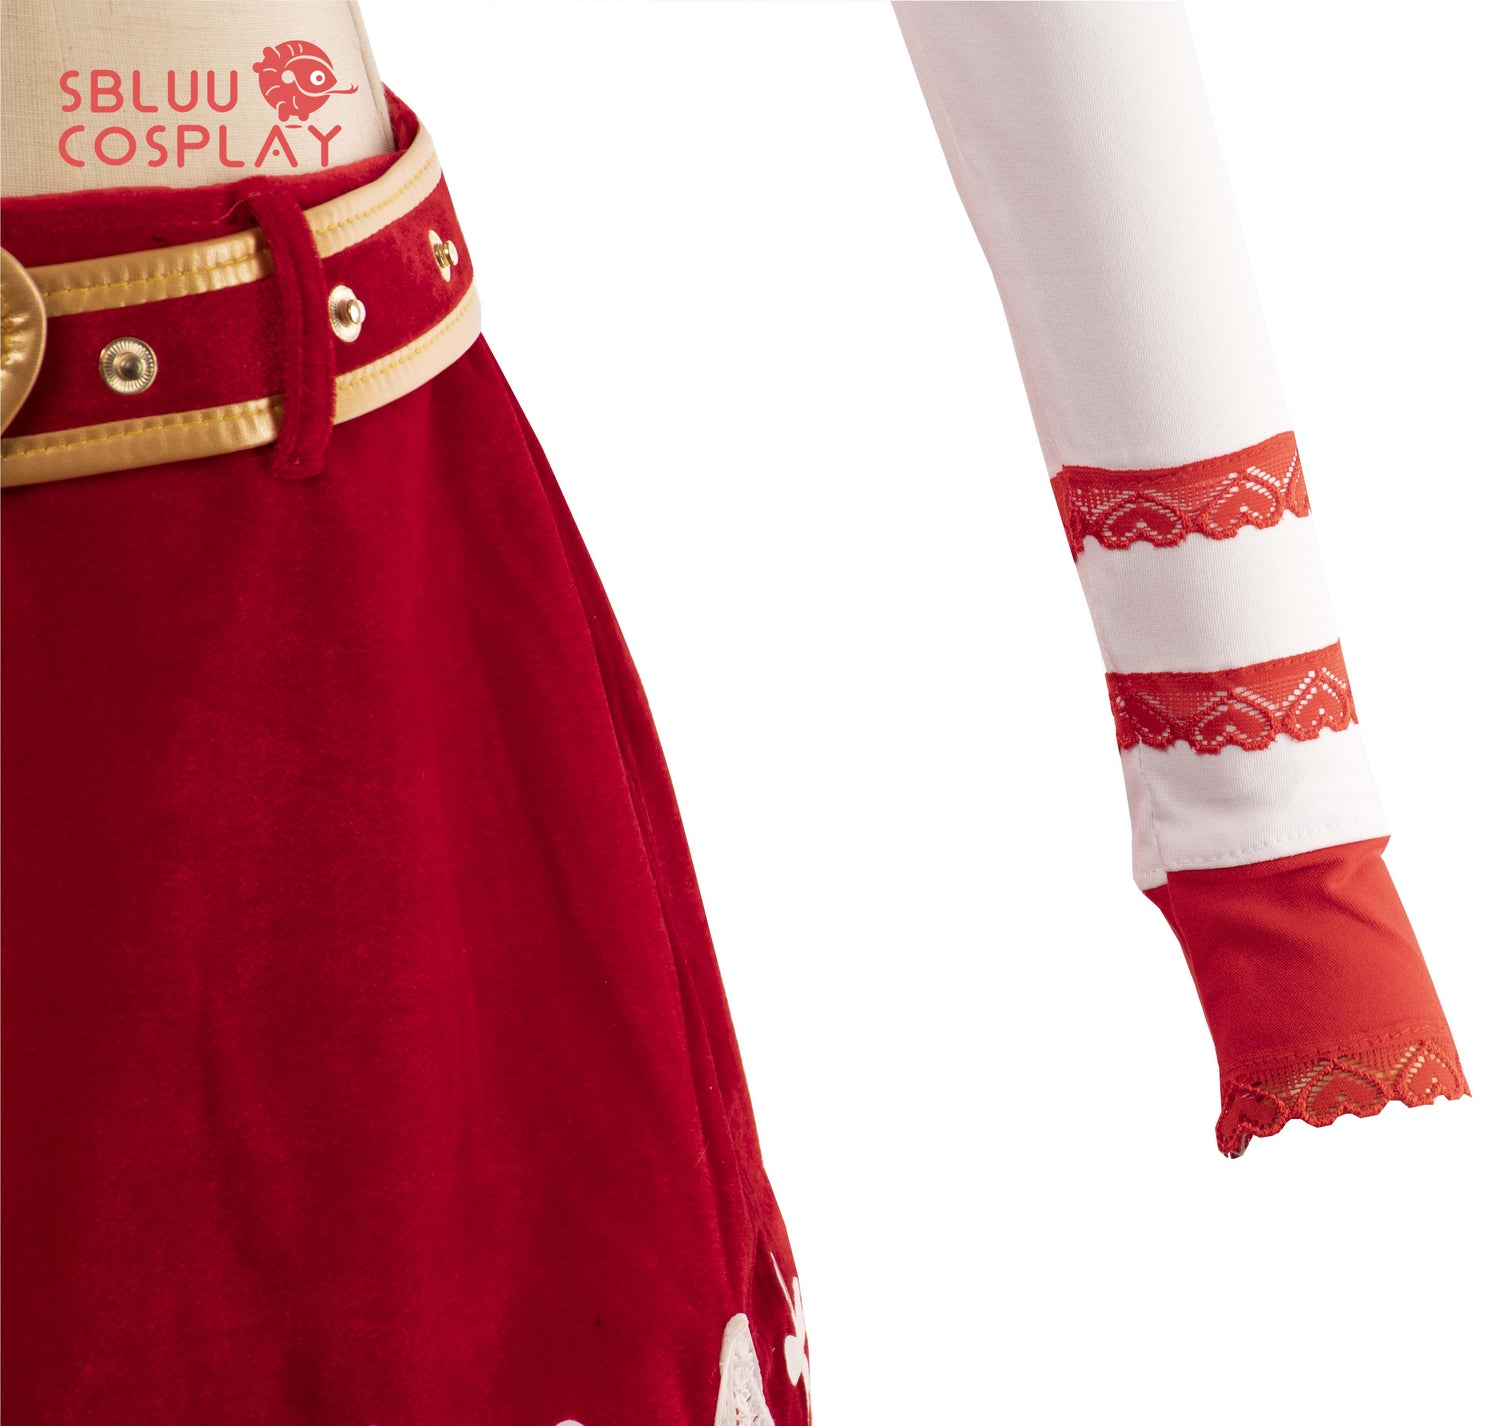 SBluuCosplay One Piece Princess Mononoke Perona Cosplay Costume Outfit